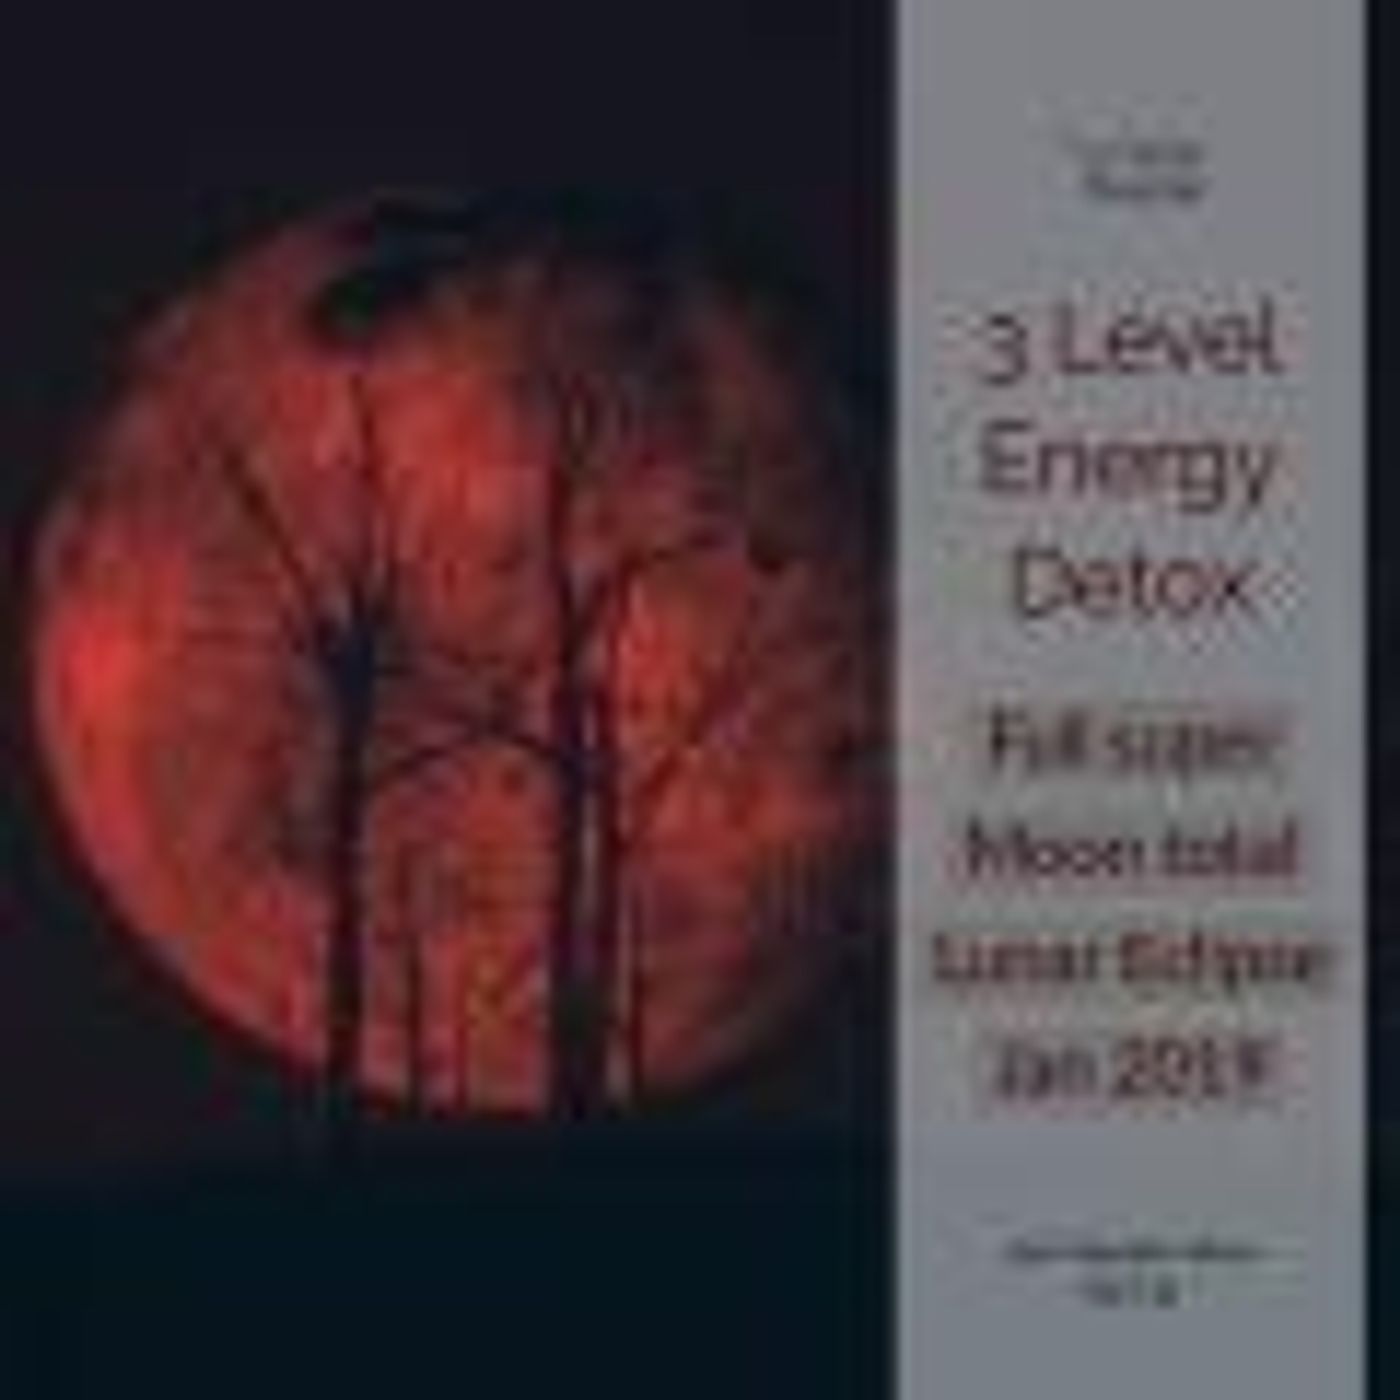 3 Level Energy Detox: Full Super Moon Total Lunar Eclipse